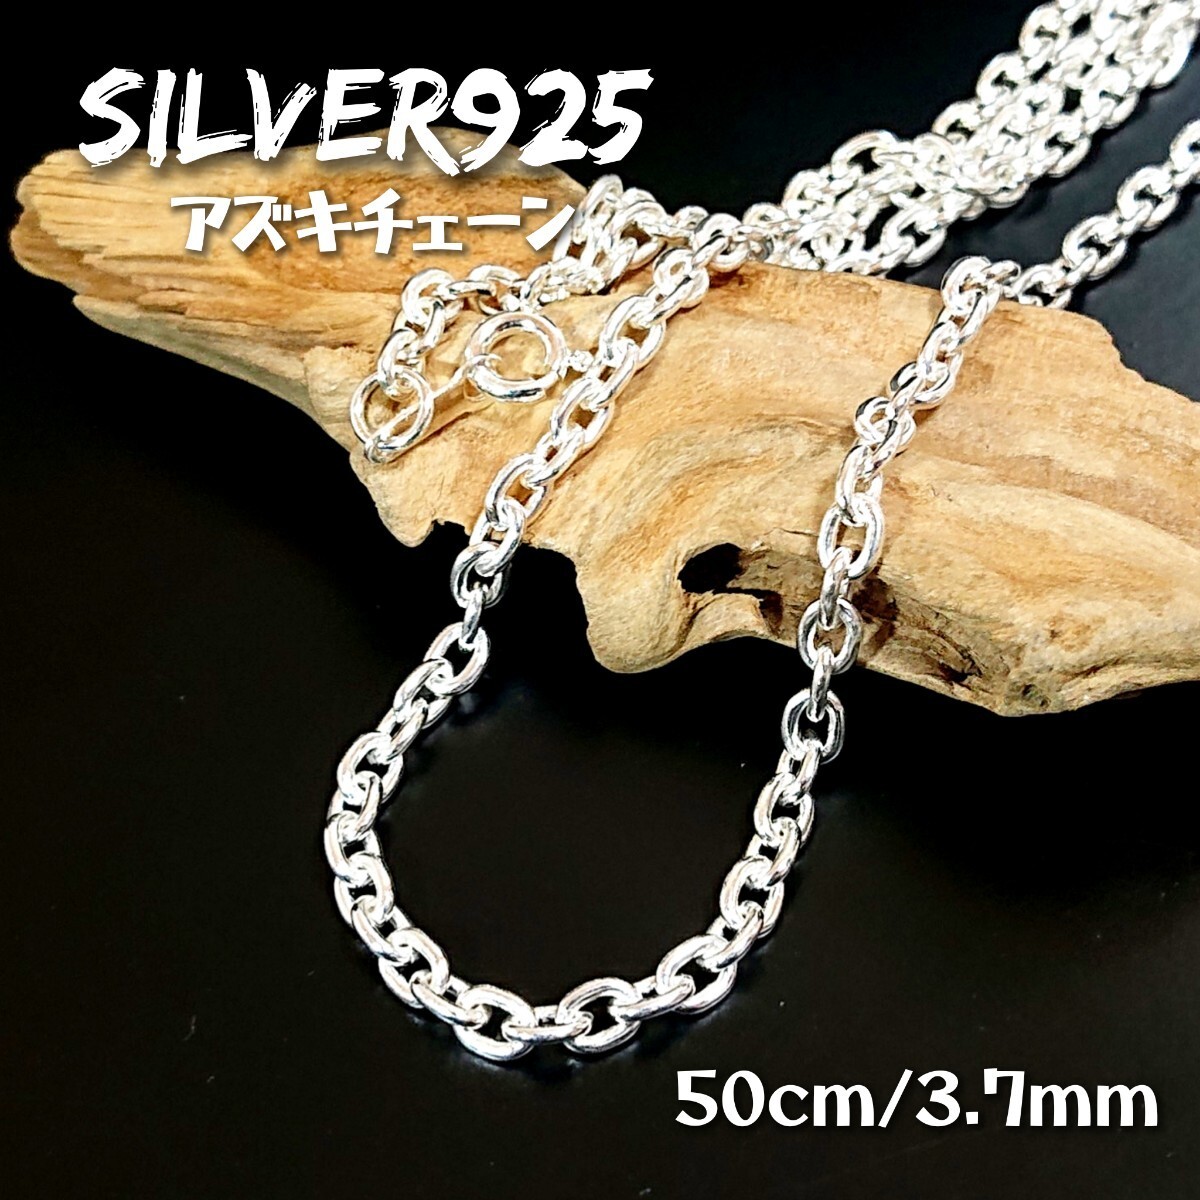 2803 SILVER925 アズキネックレスチェーン50cm/3.7mm シルバー925 20-50 定番人気 シンプル あずき 楕円 オーバル ユニセックス 　売れ筋